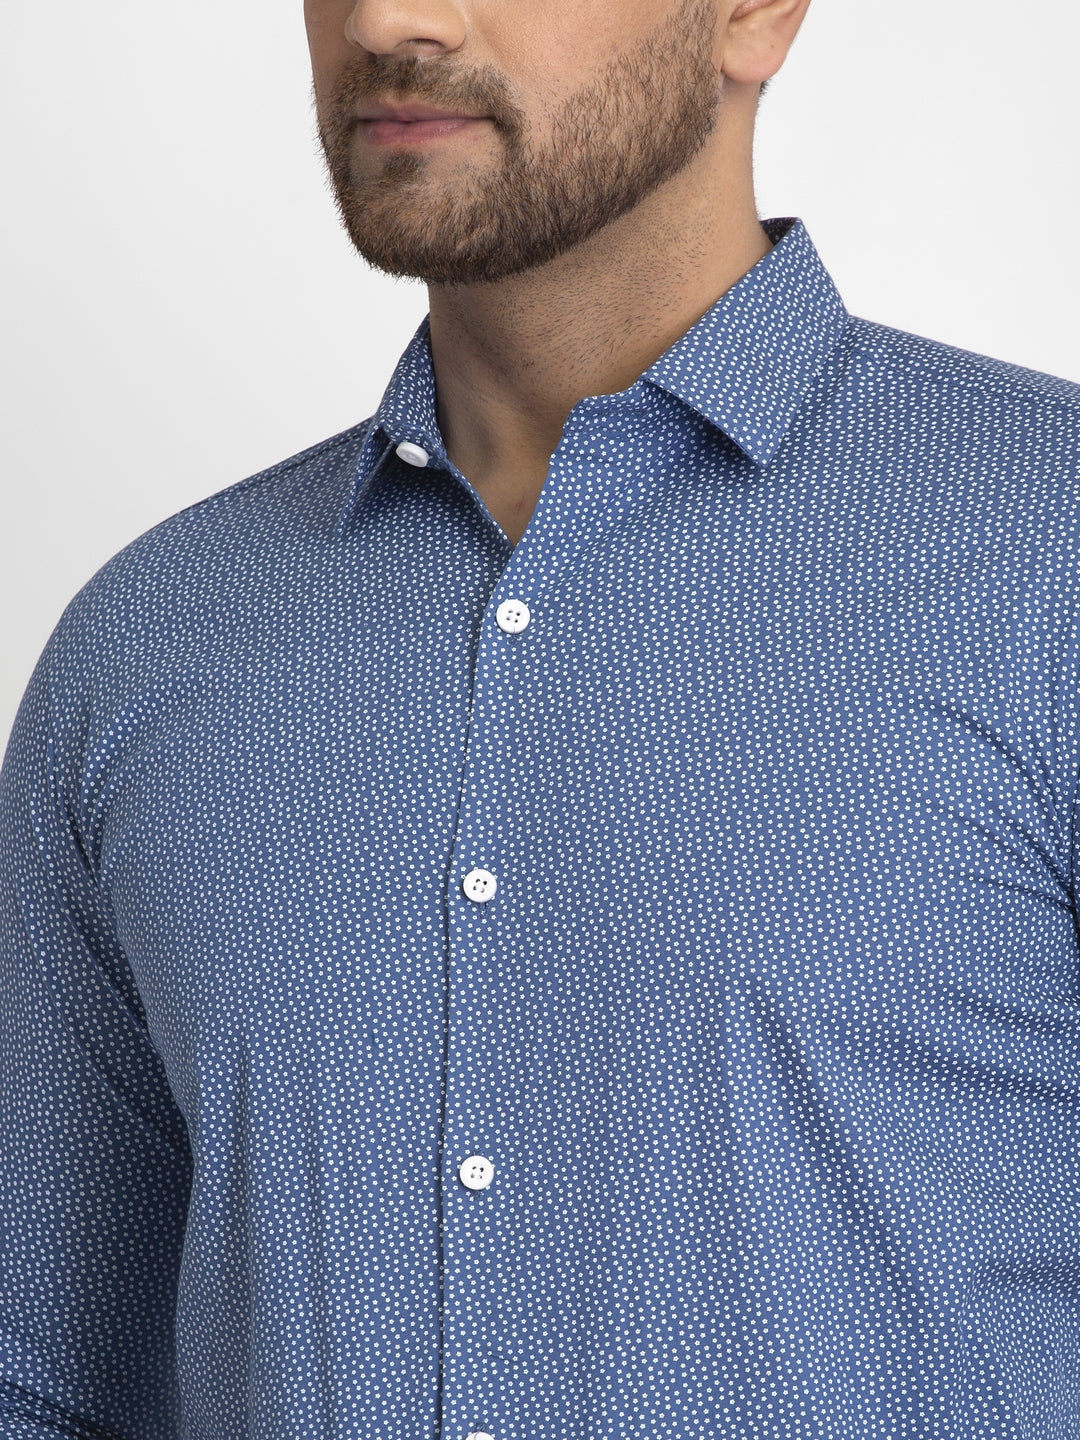 Men's Blue Cotton Printed Formal Shirts ( SF 428Blue ) - Jainish